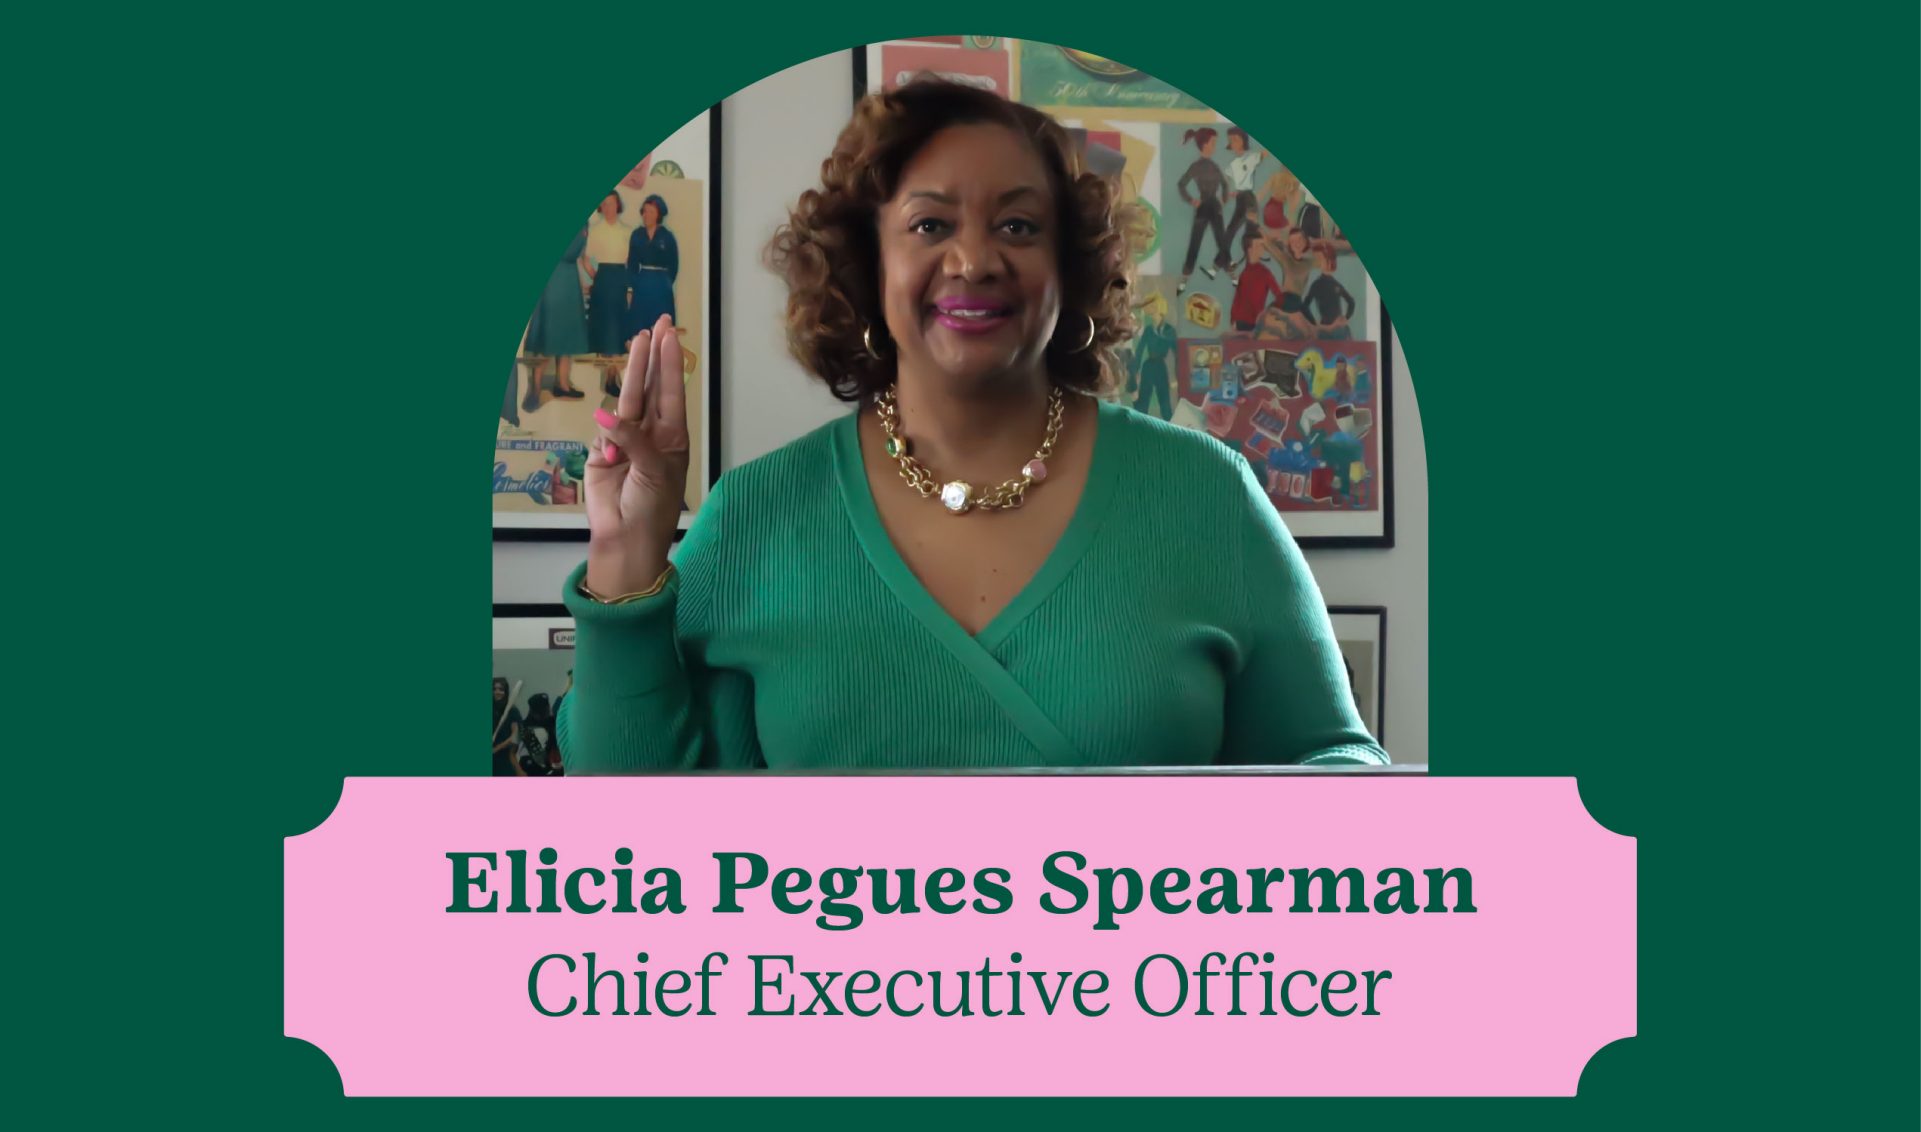 Introducing Elicia Pegues Spearman!